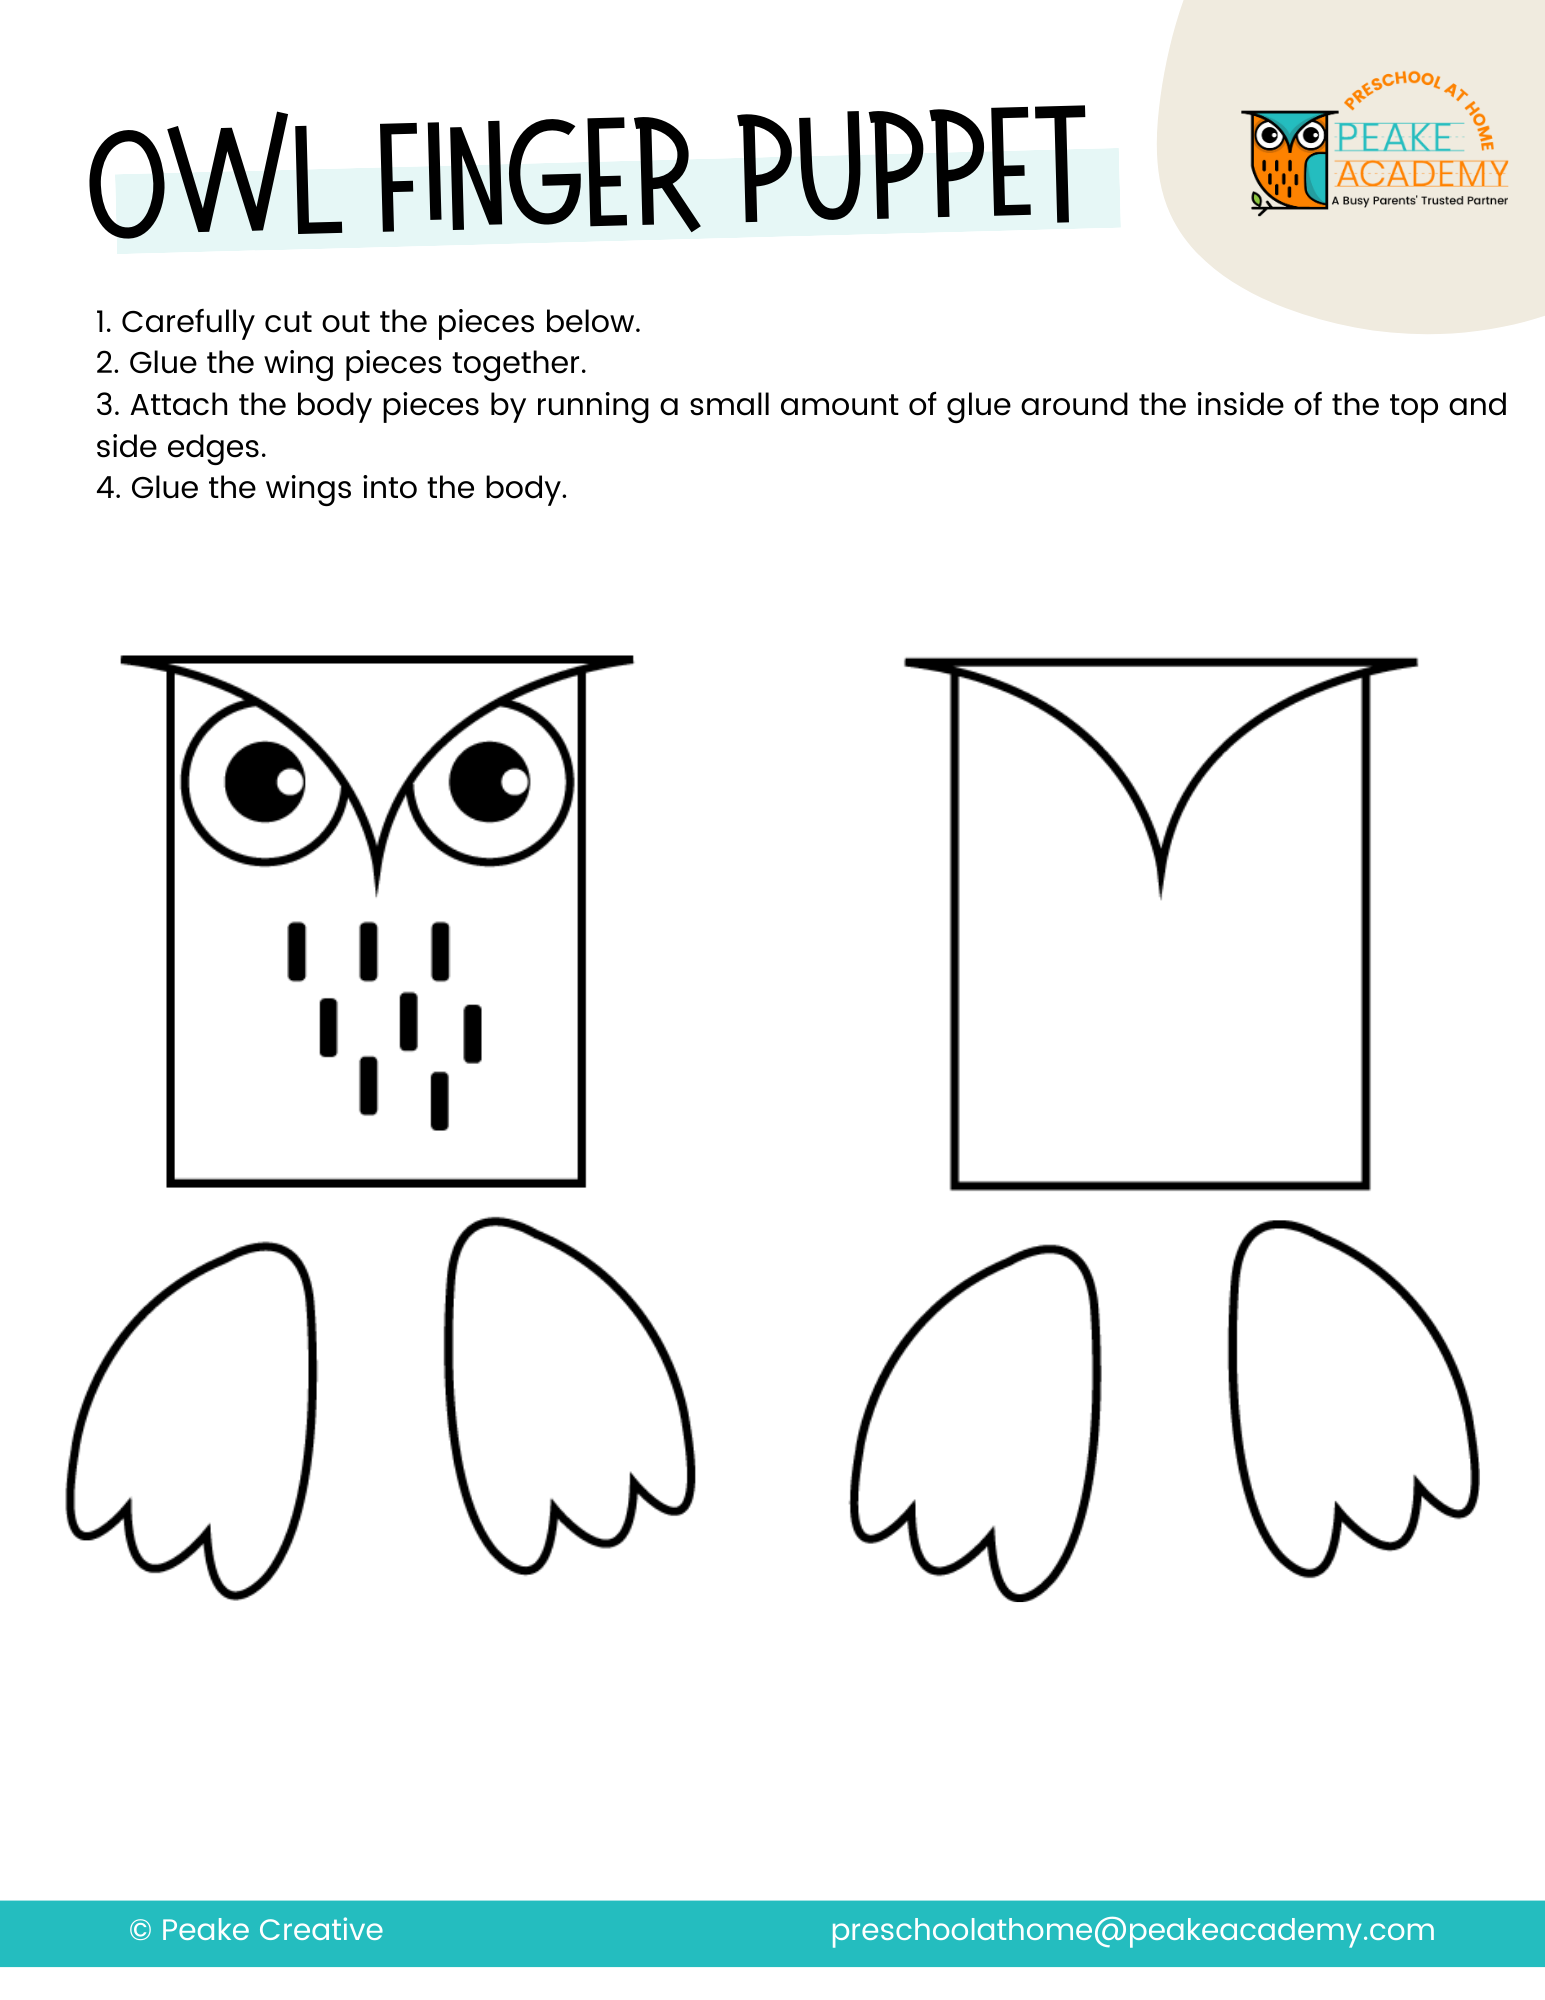 Owl Finger Puppet_Peake Academy (1).png